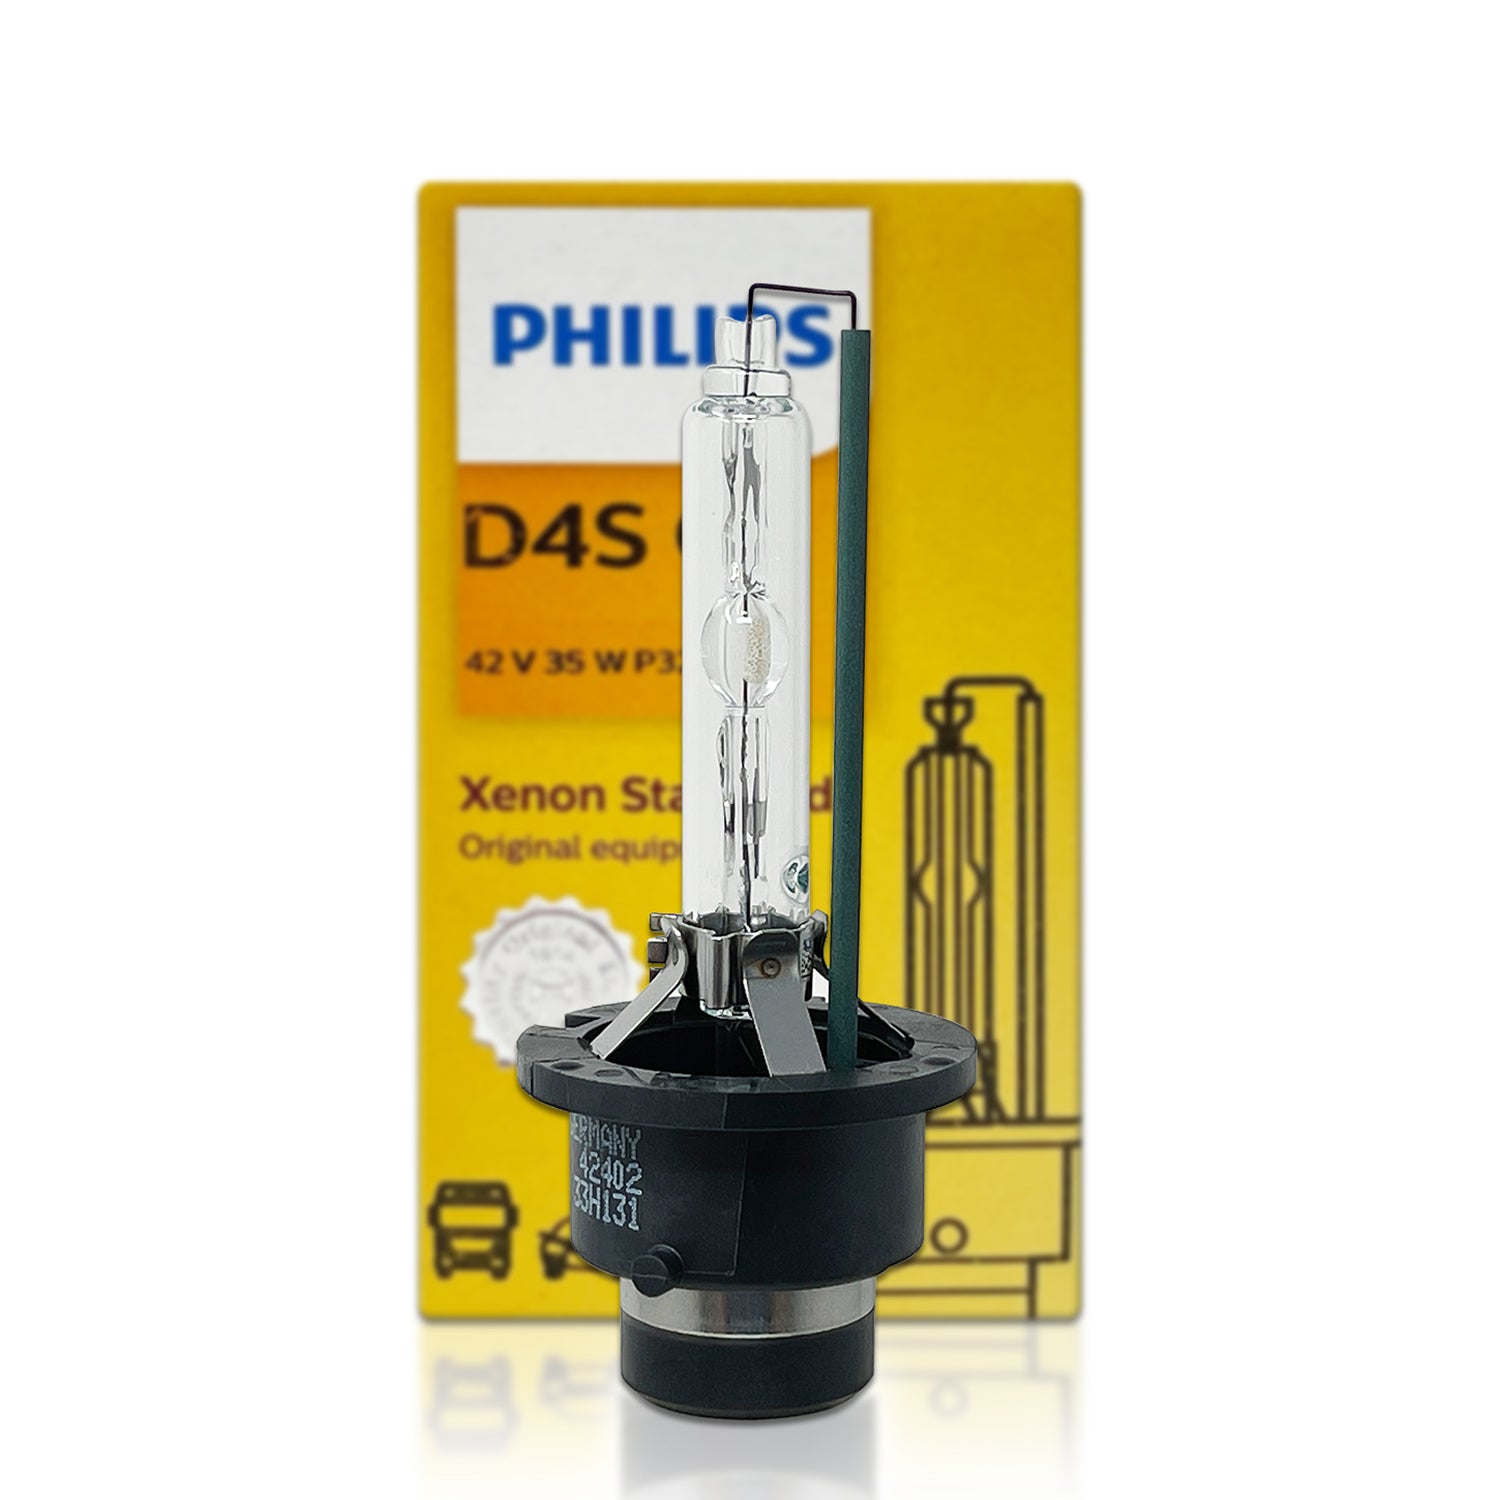 Philips D4S Xenon Bulb XenStart